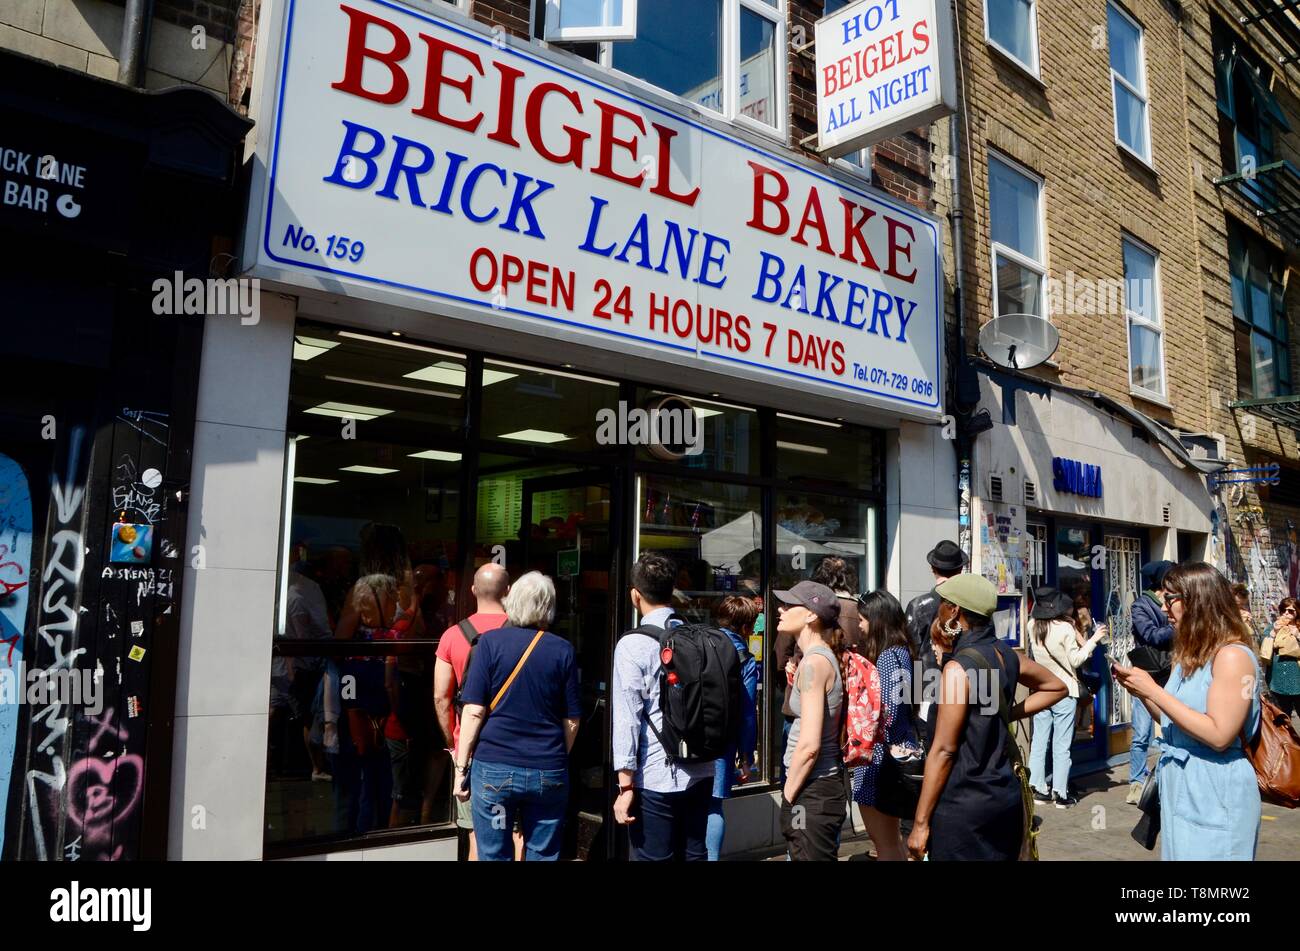 the bagel bake shop on brick lane london uk Stock Photo